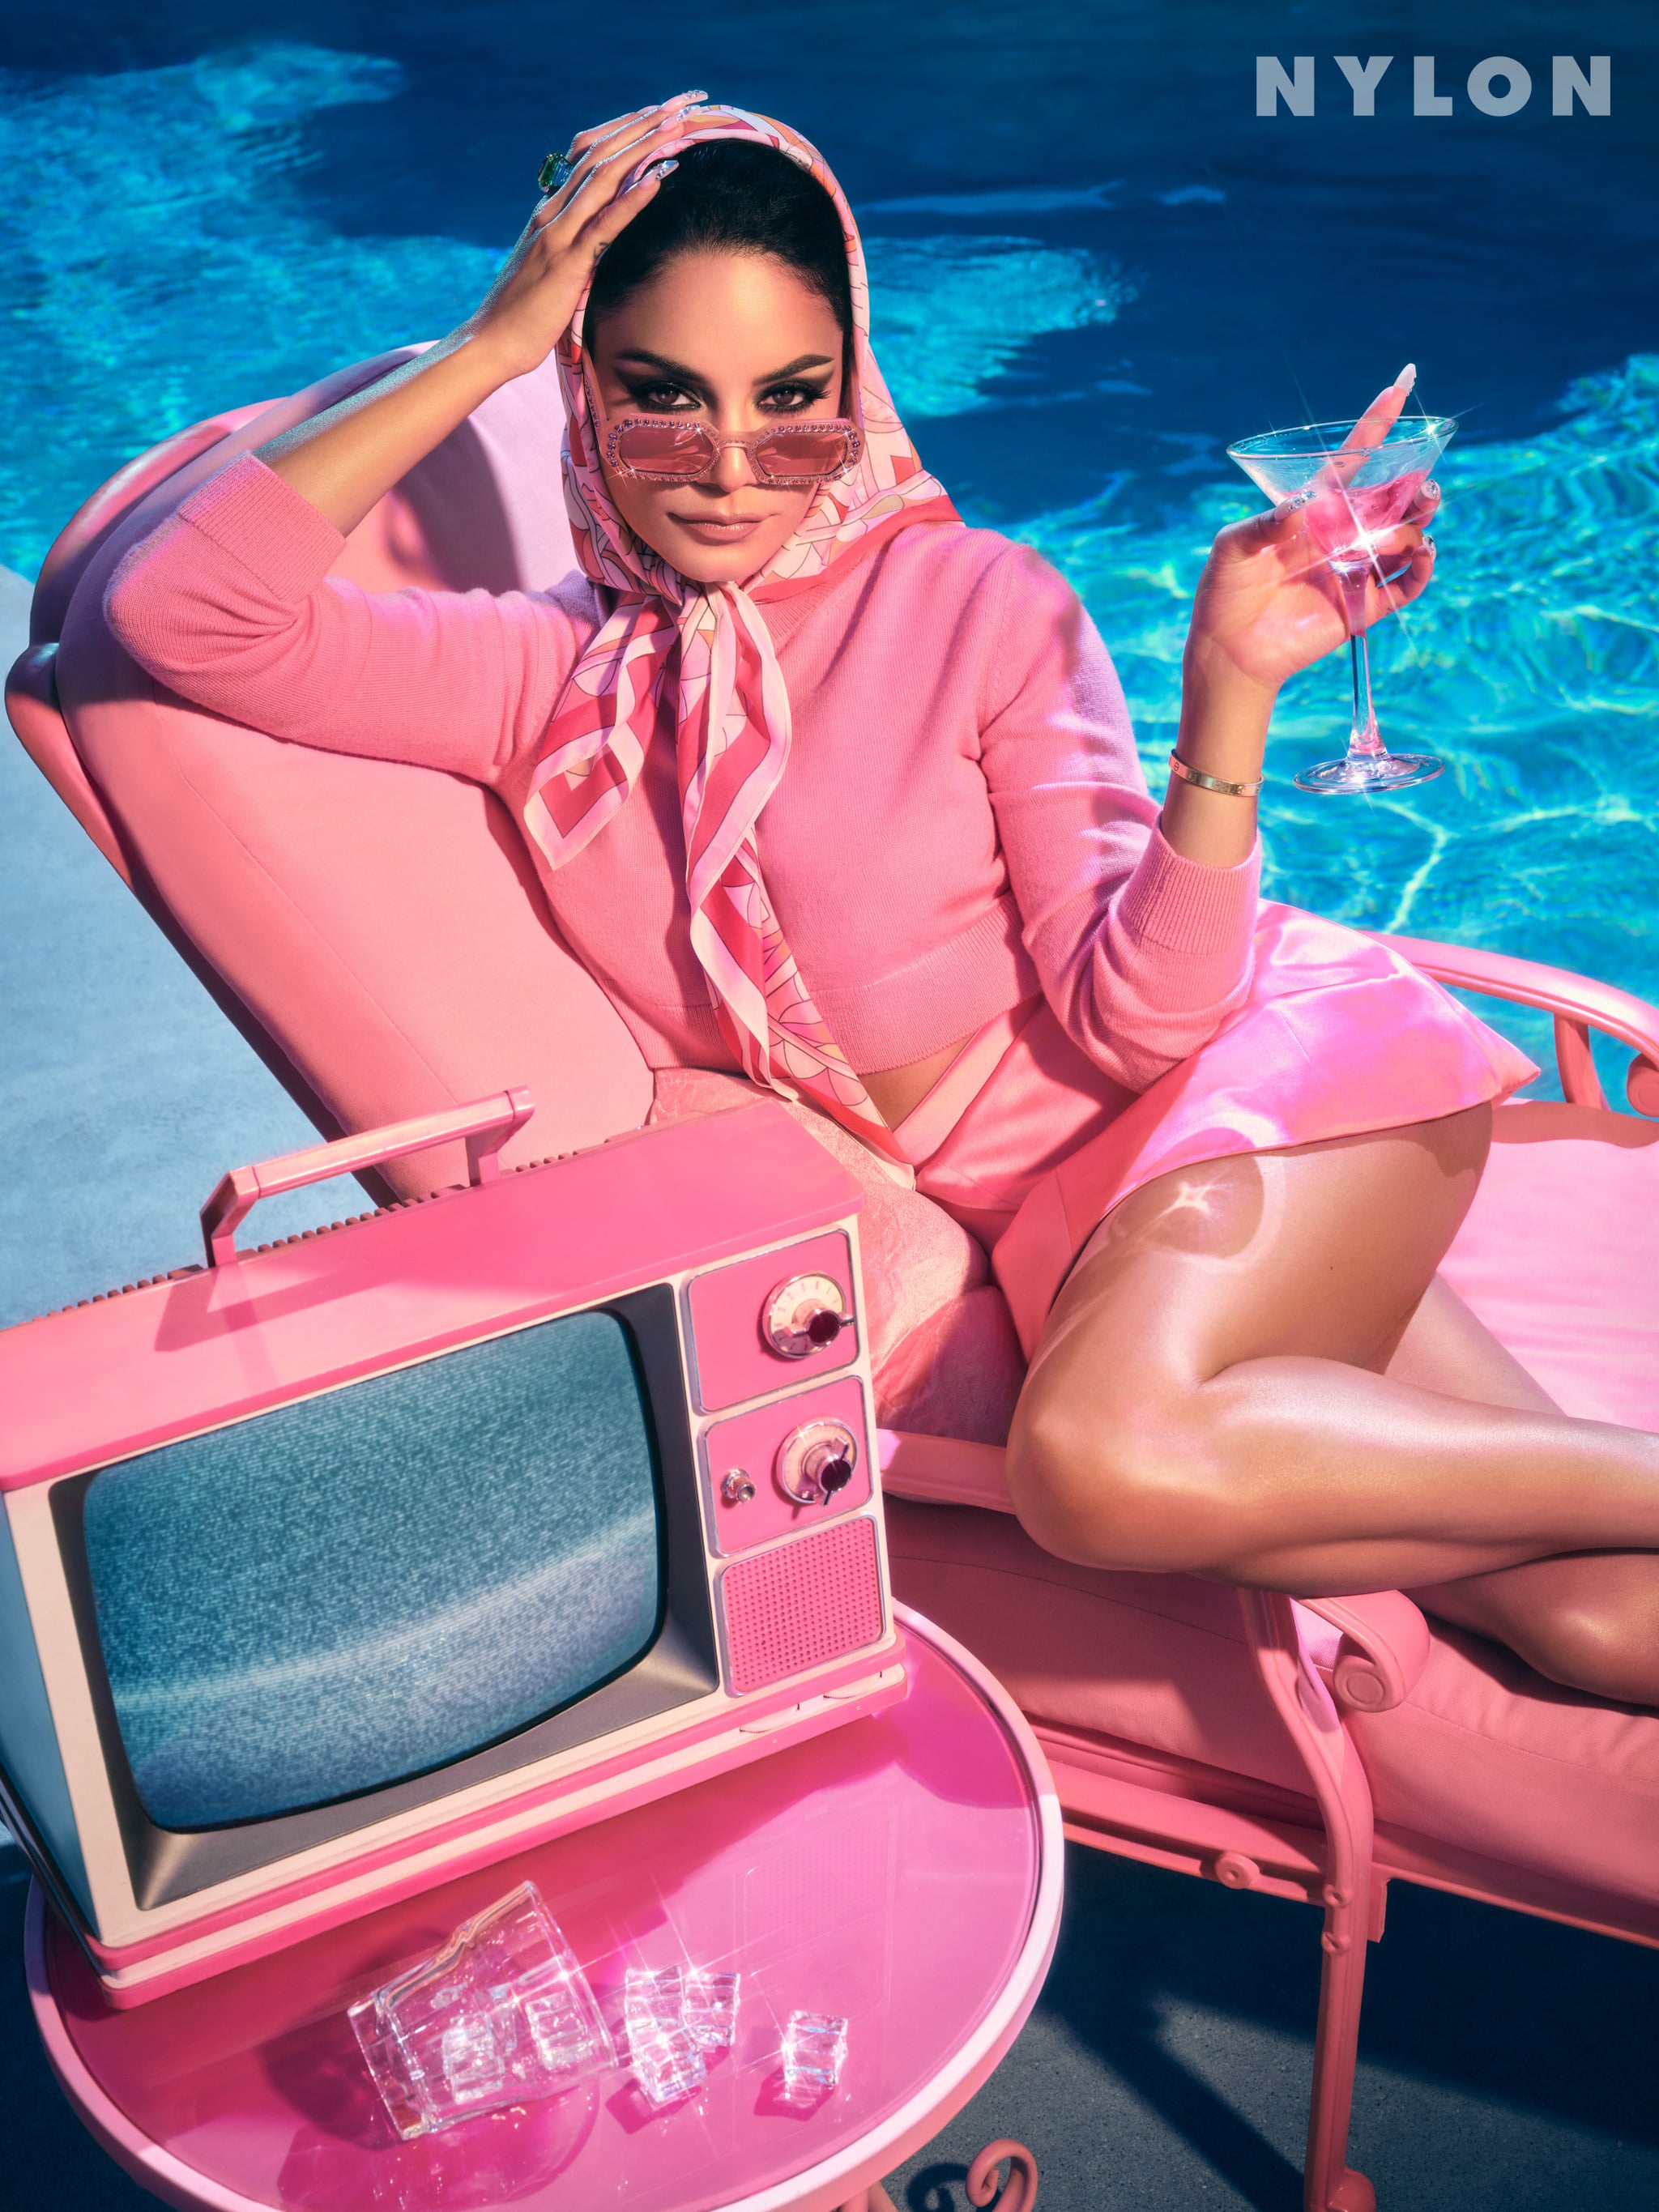 Vanessa Hudgens Wears Miu Miu Lingerie For NYLON Cover Story